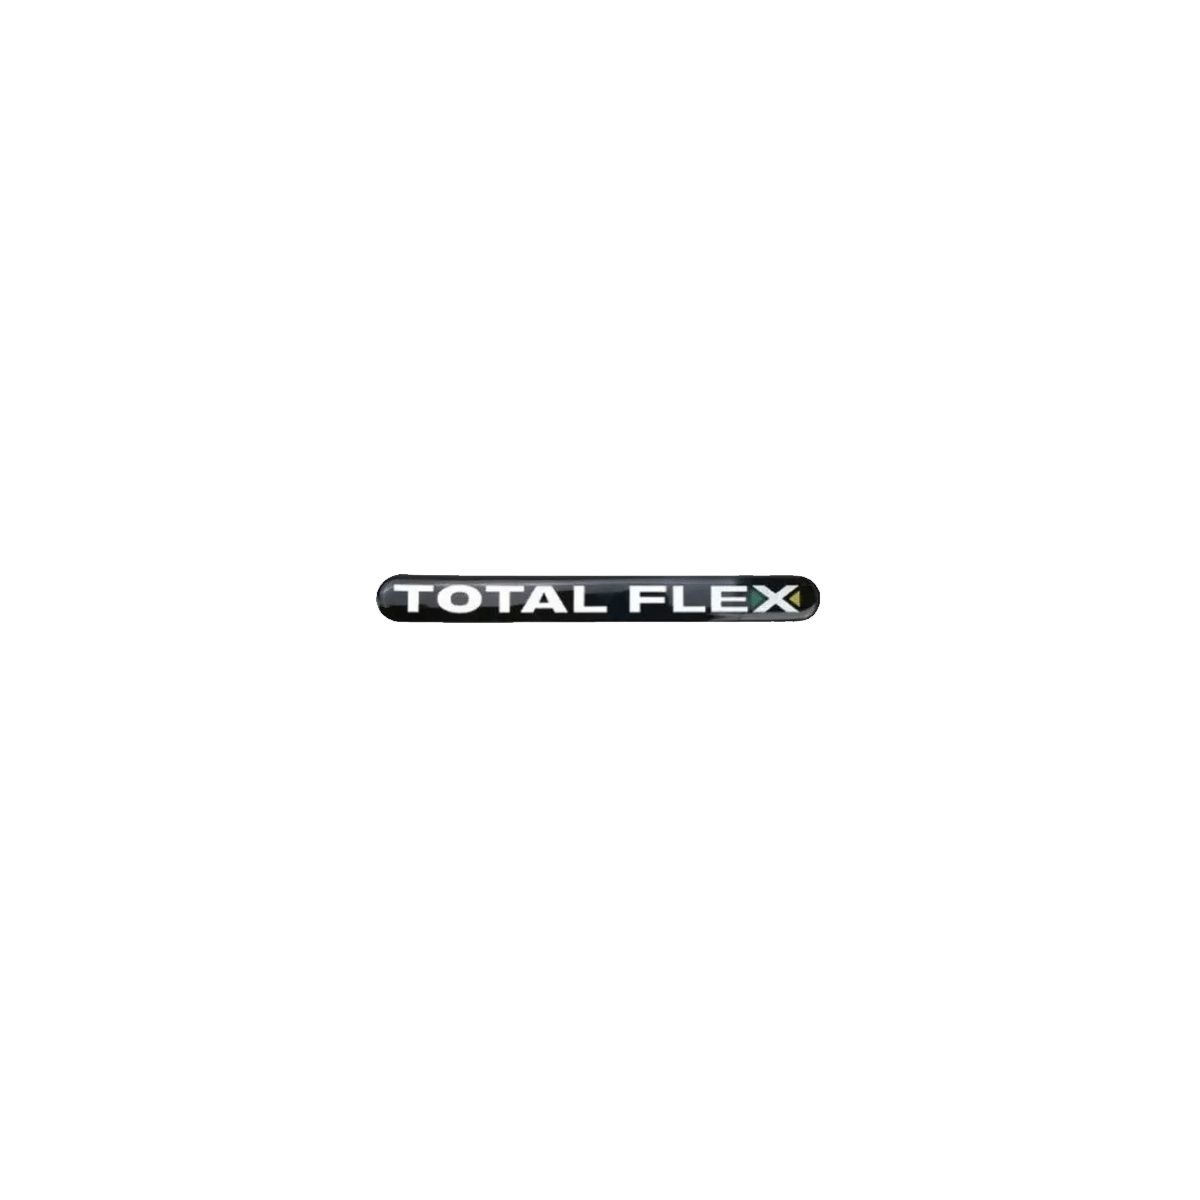 Emblema Total Flex (Vidro Traseiro)